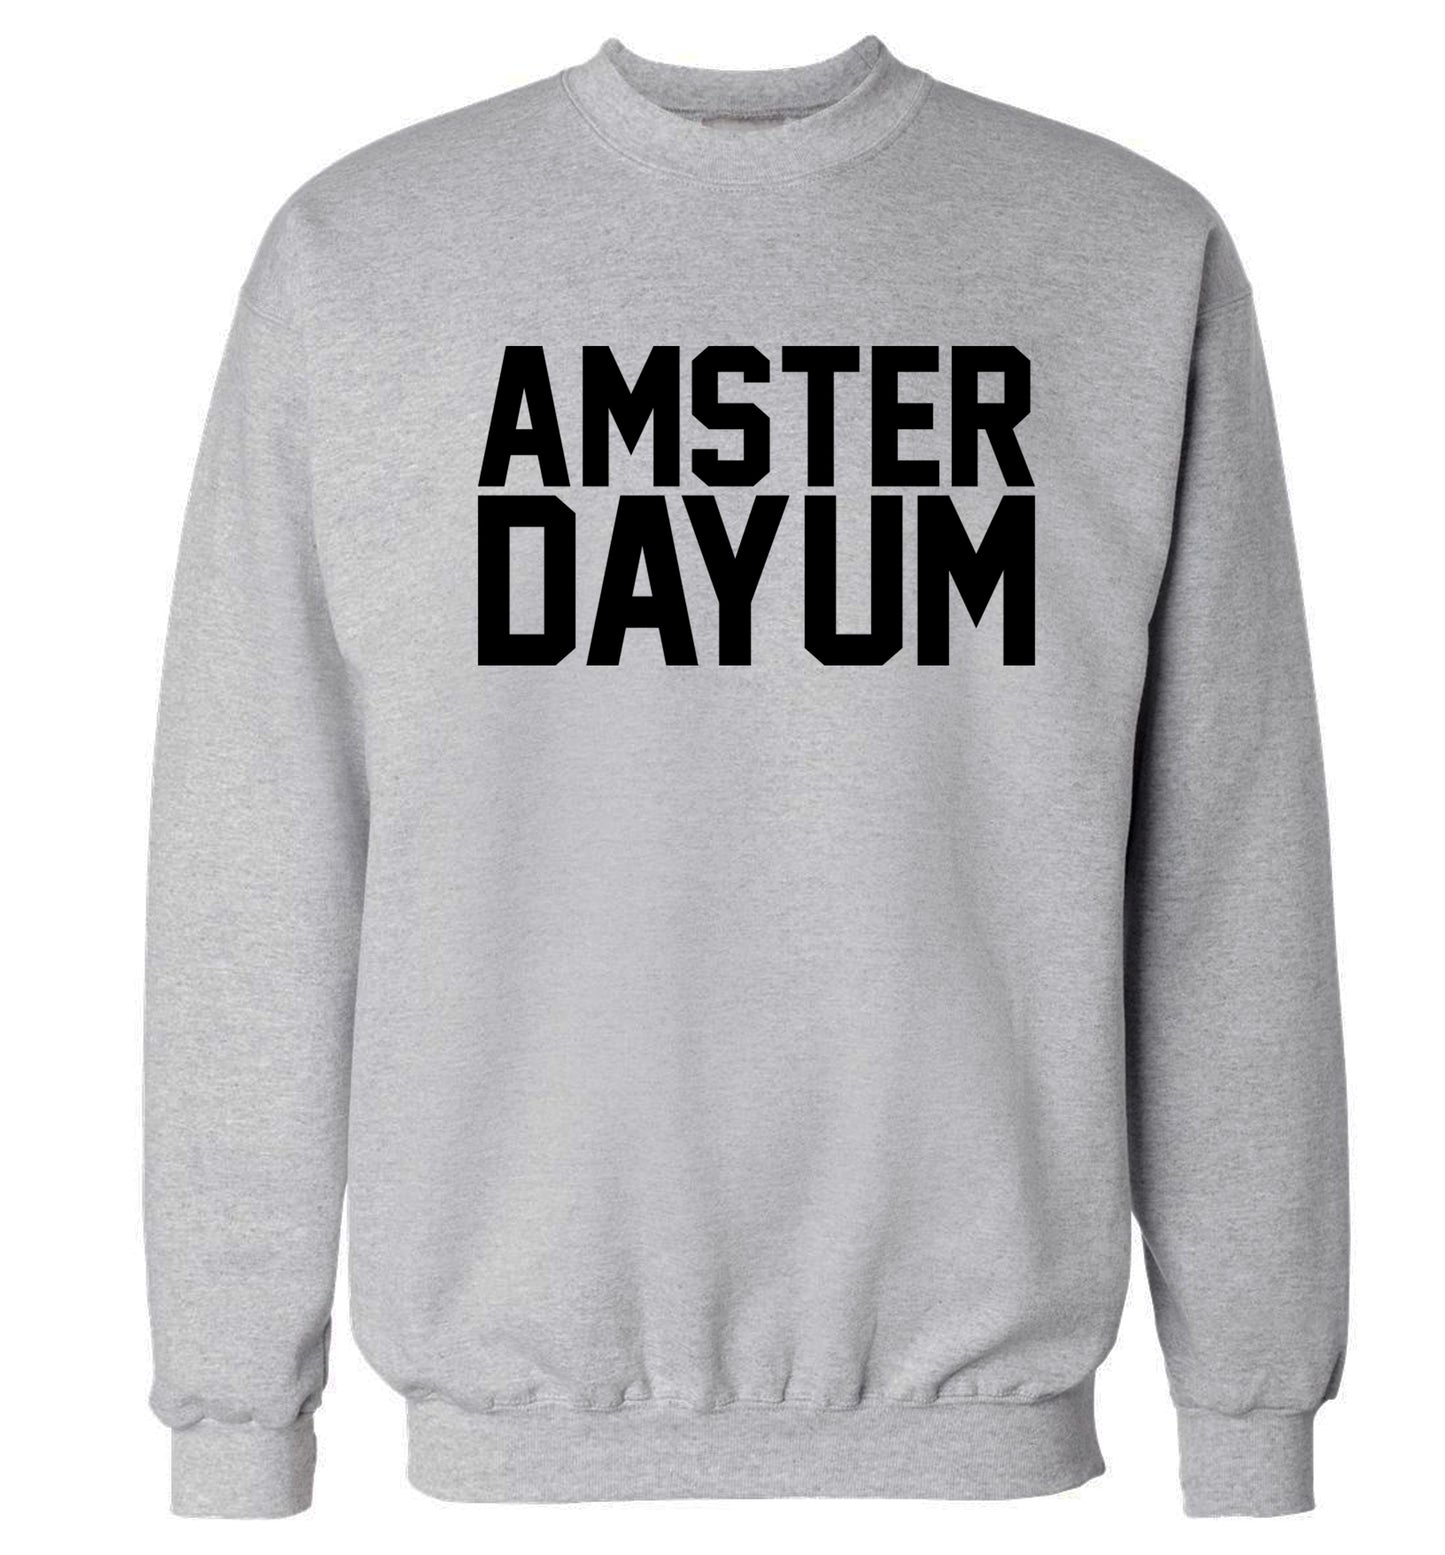 Amsterdayum Adult's unisex grey Sweater 2XL